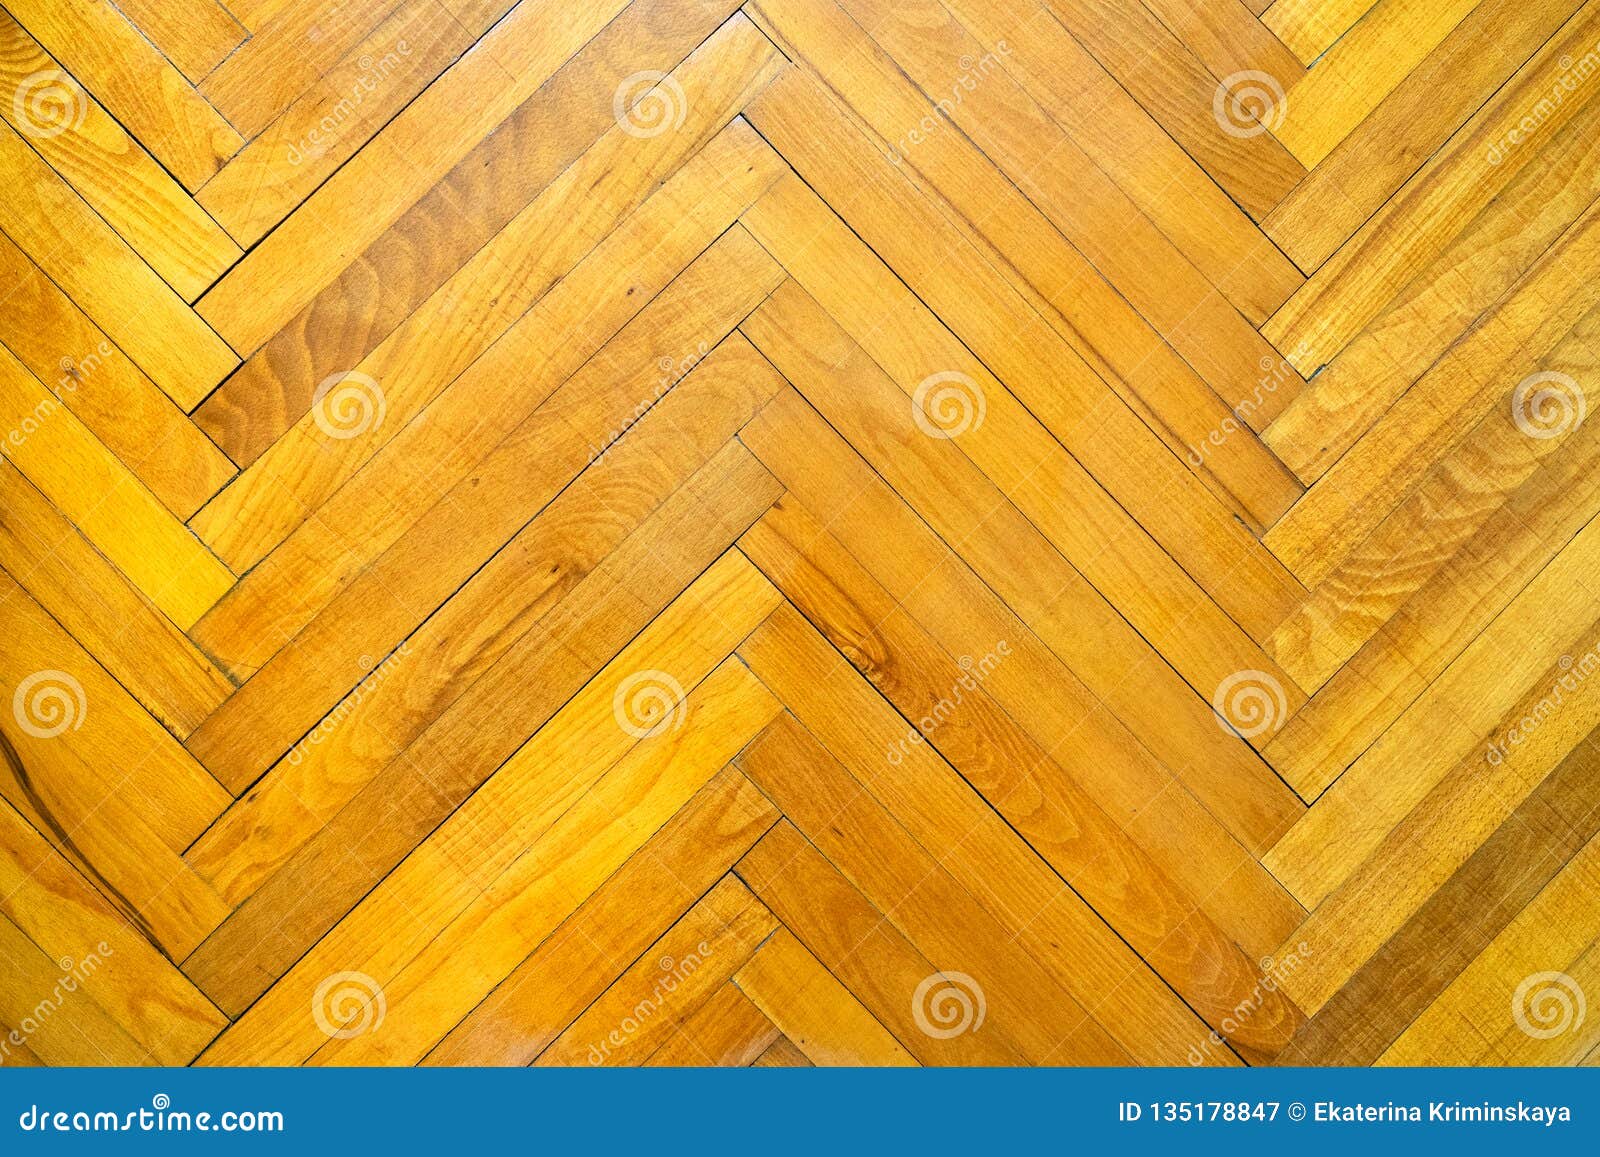 Floor With Herringbone Parquet From Oak Wood Stock Image Image